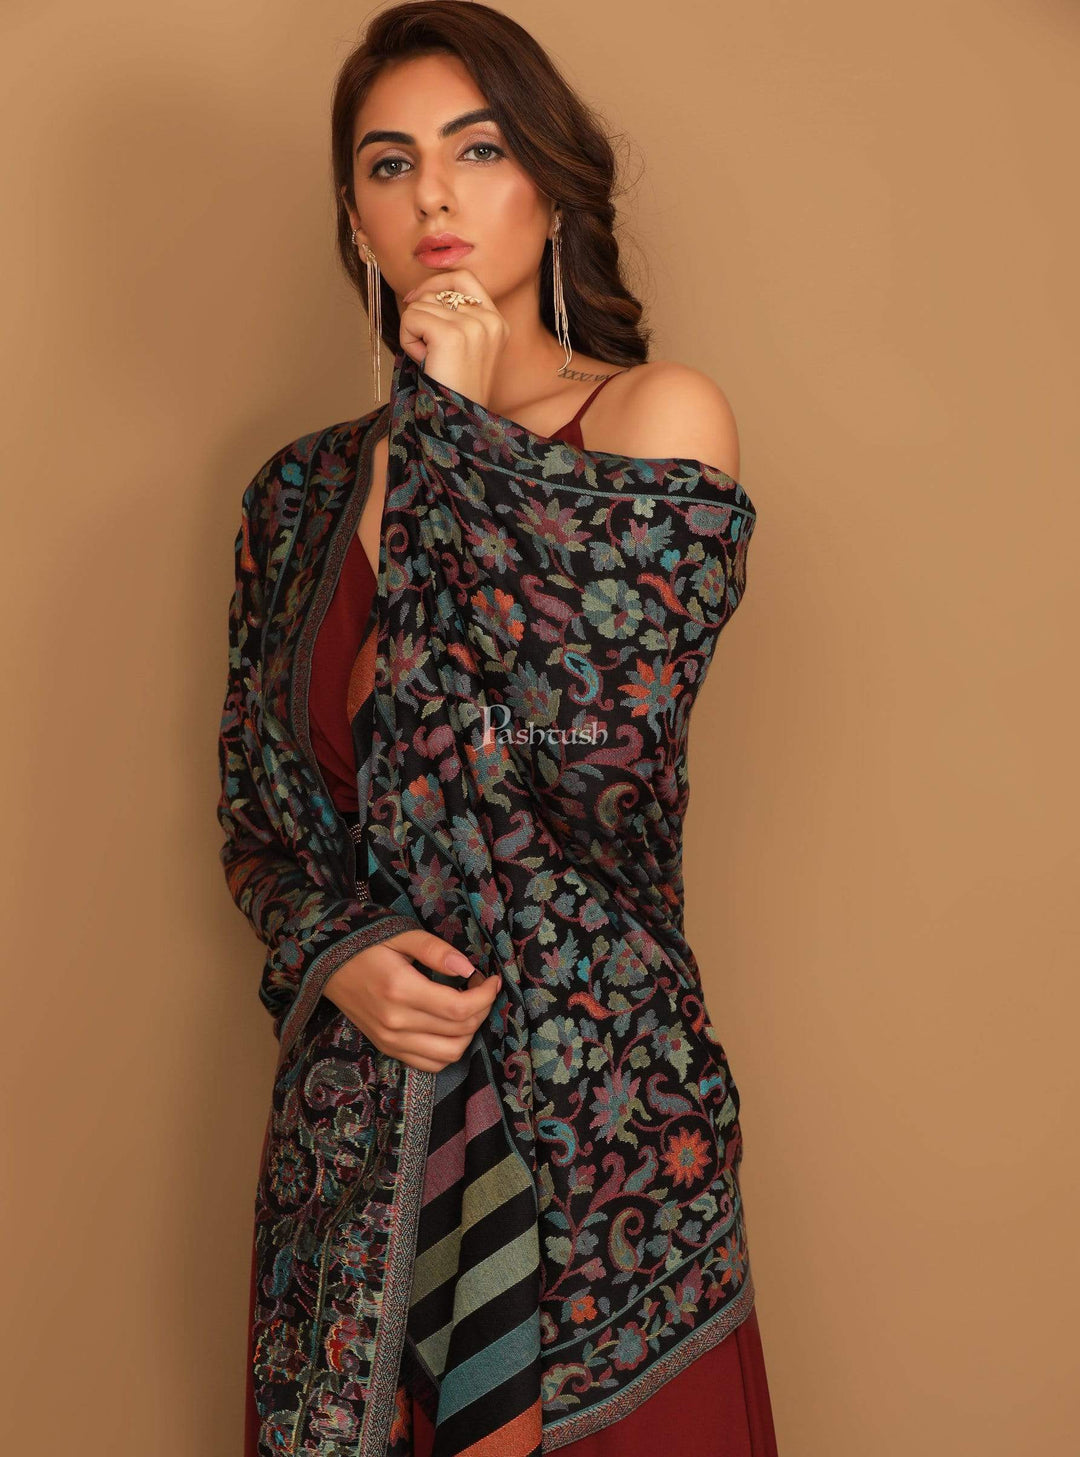 Pashtush Shawl Store Stole Pashtush Women's Kaani Design, Soft Bamboo Scarf, Casual Stoles - Multicoloured